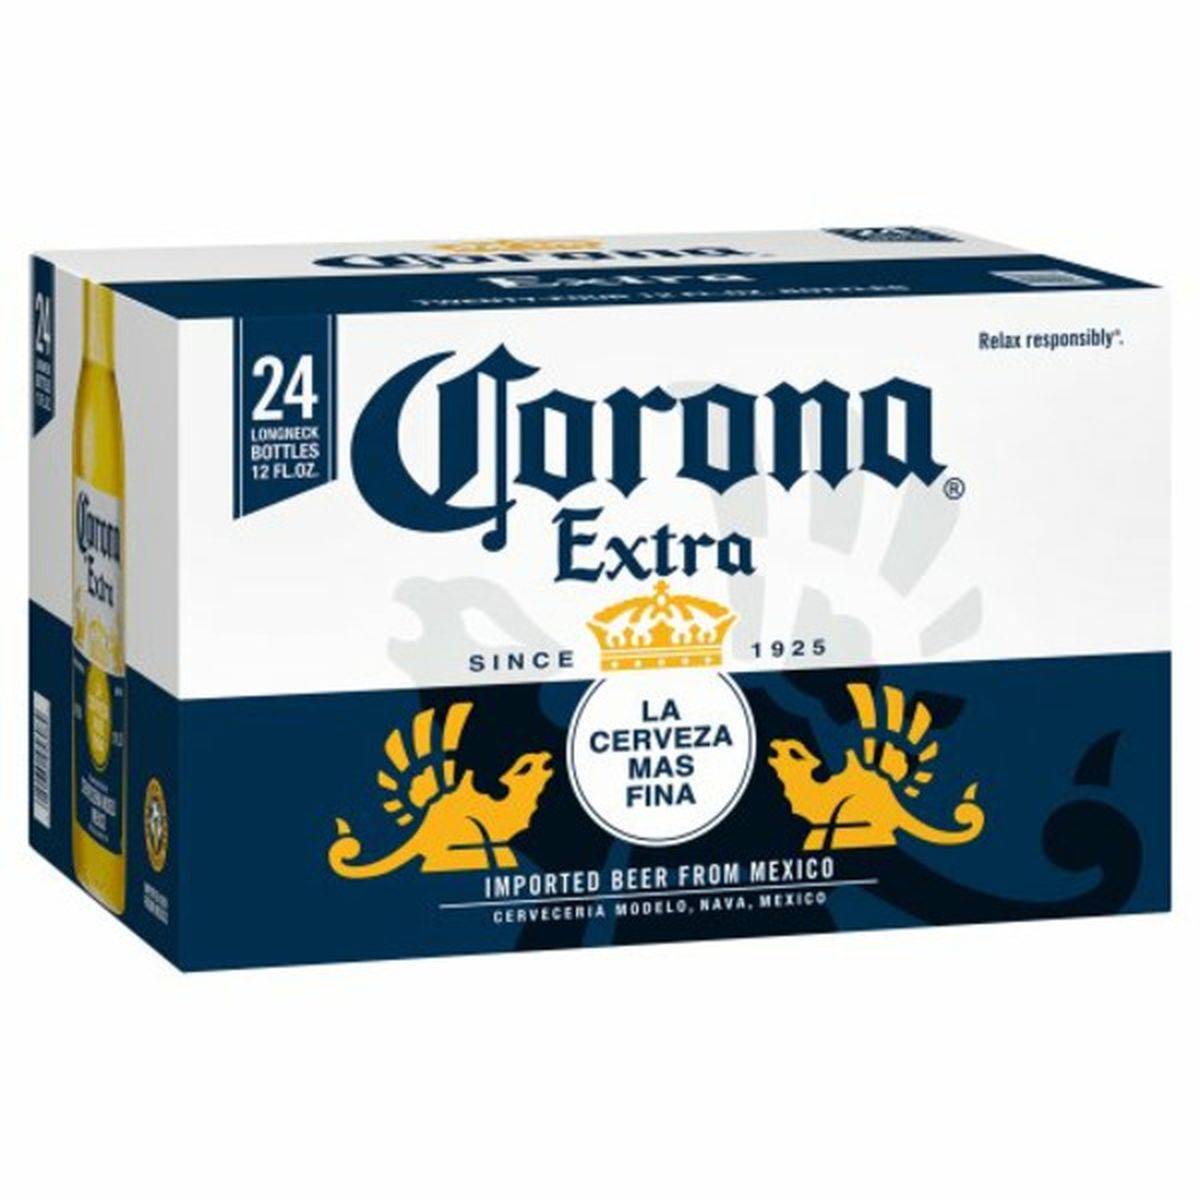 Calories in Corona Extra Extra  24/12 oz bottles